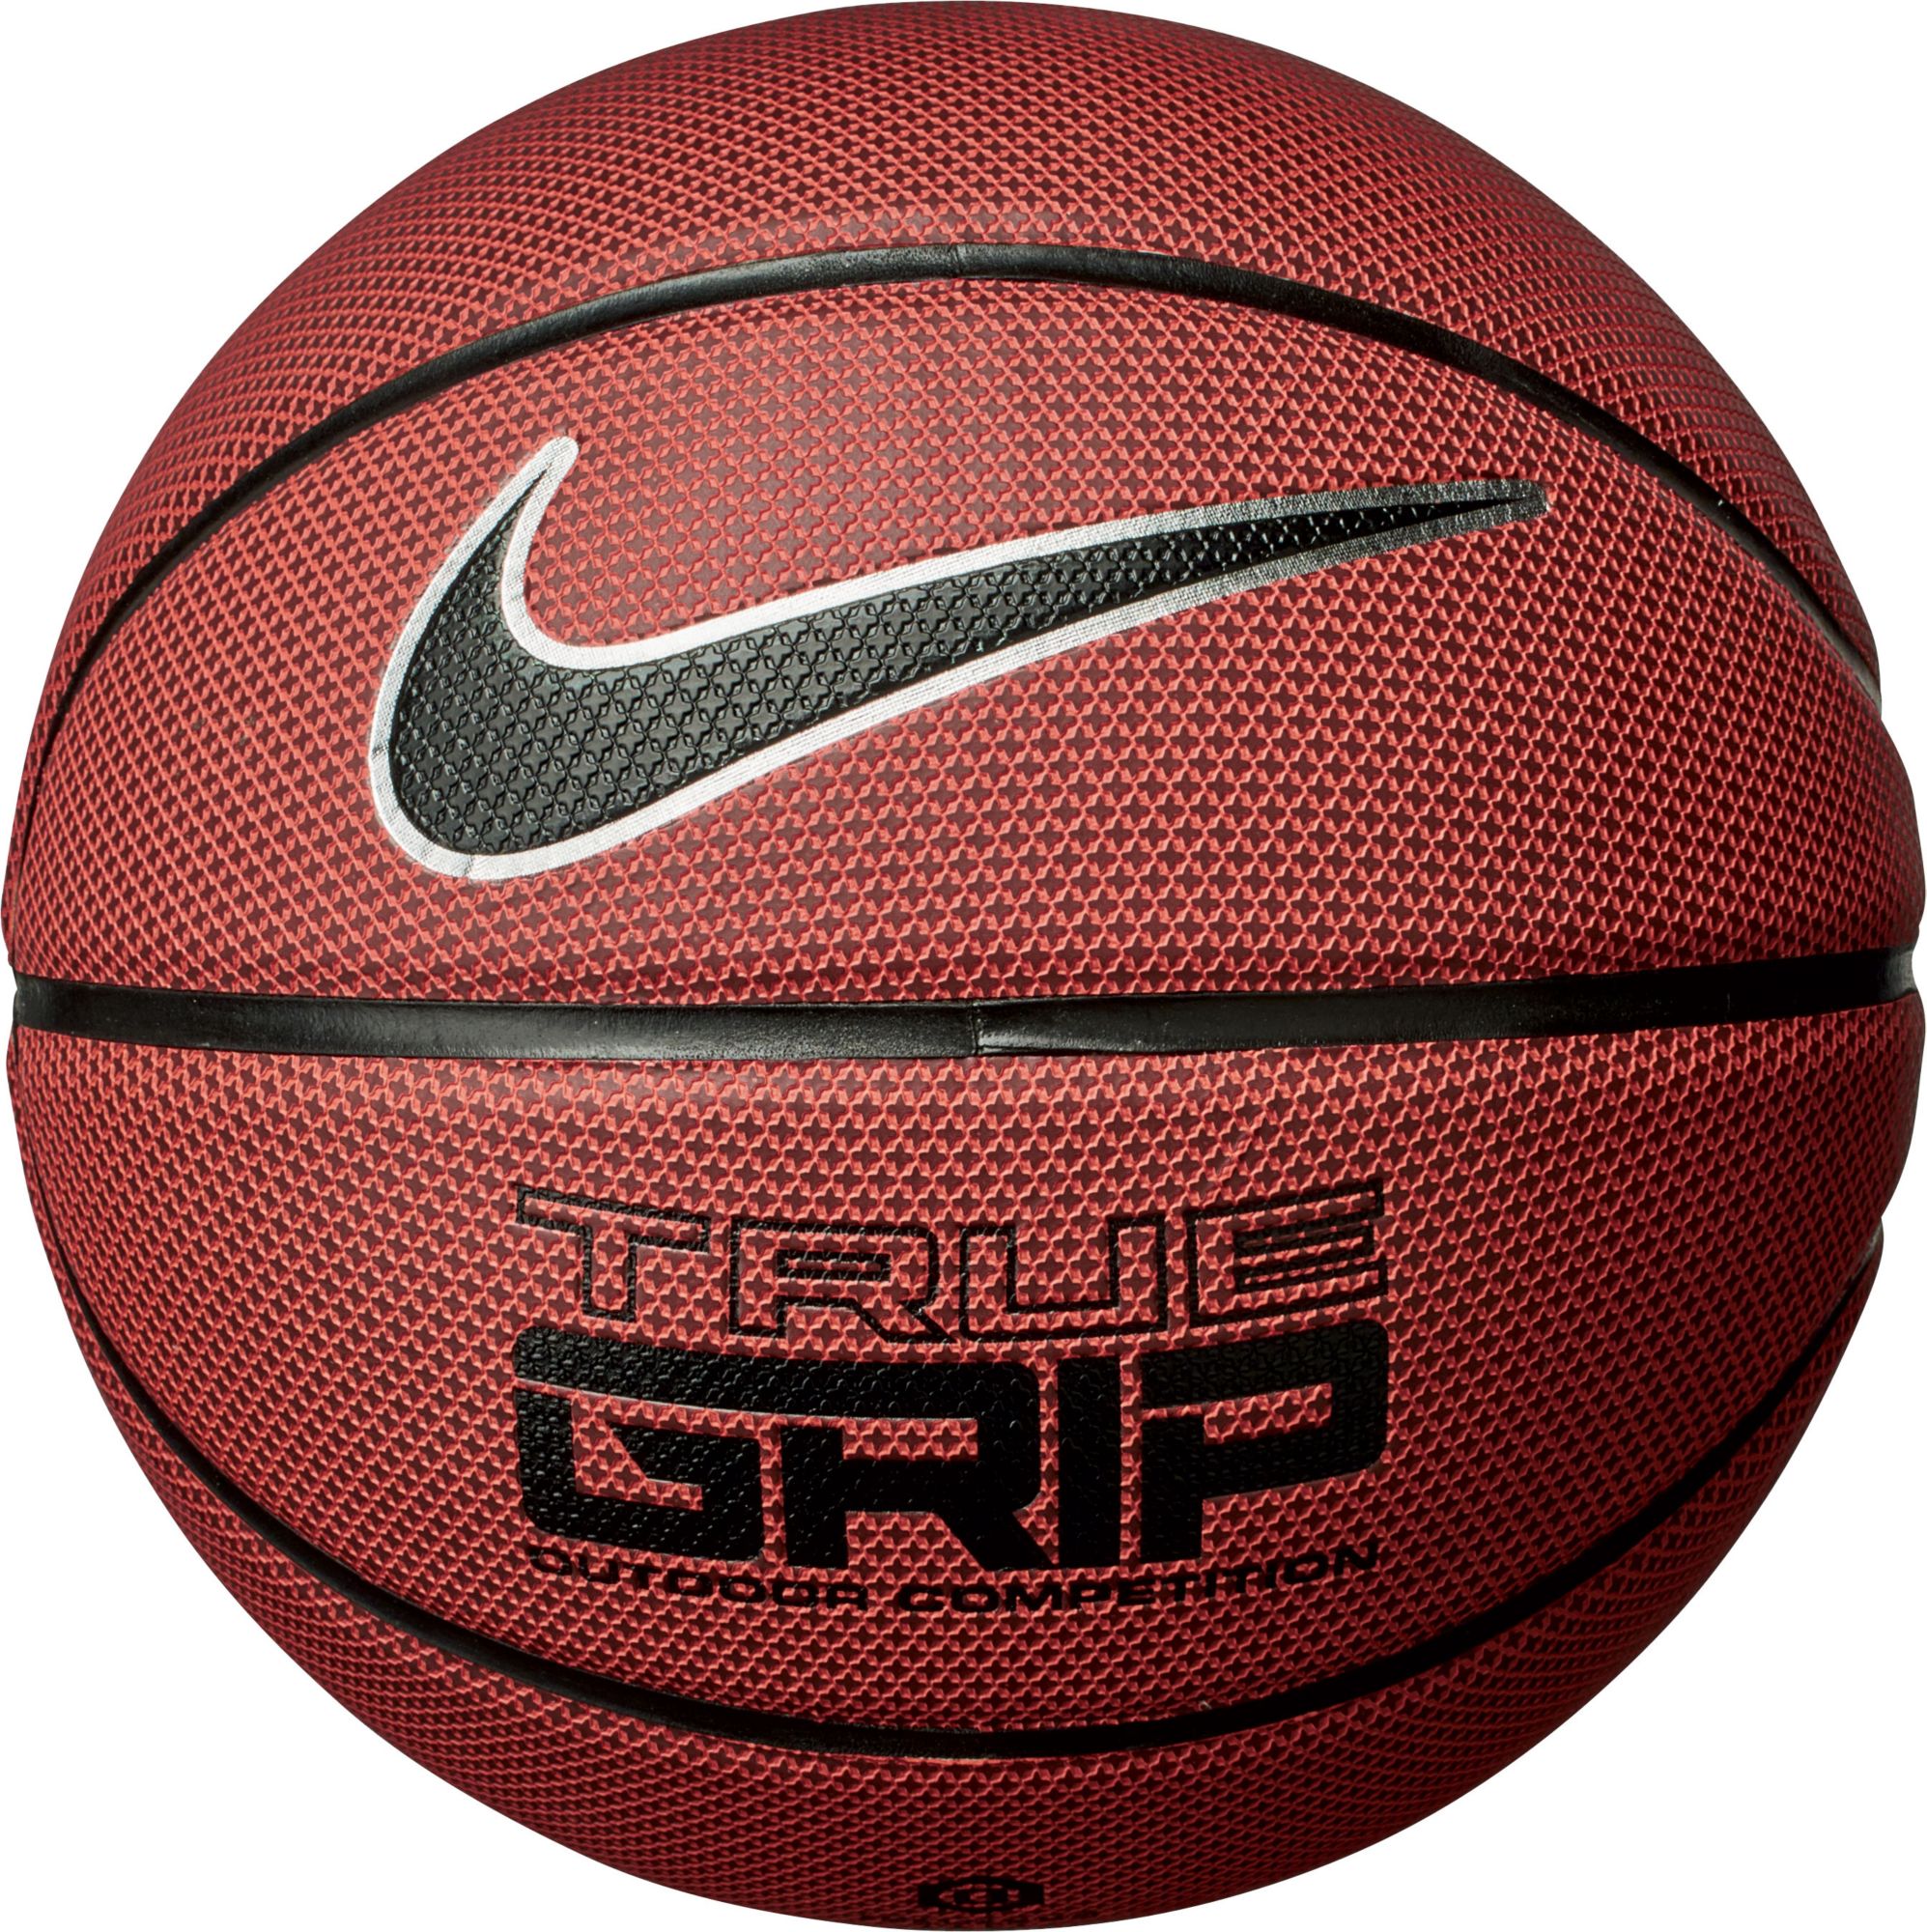 Nike True Grip Basketball (28.5 